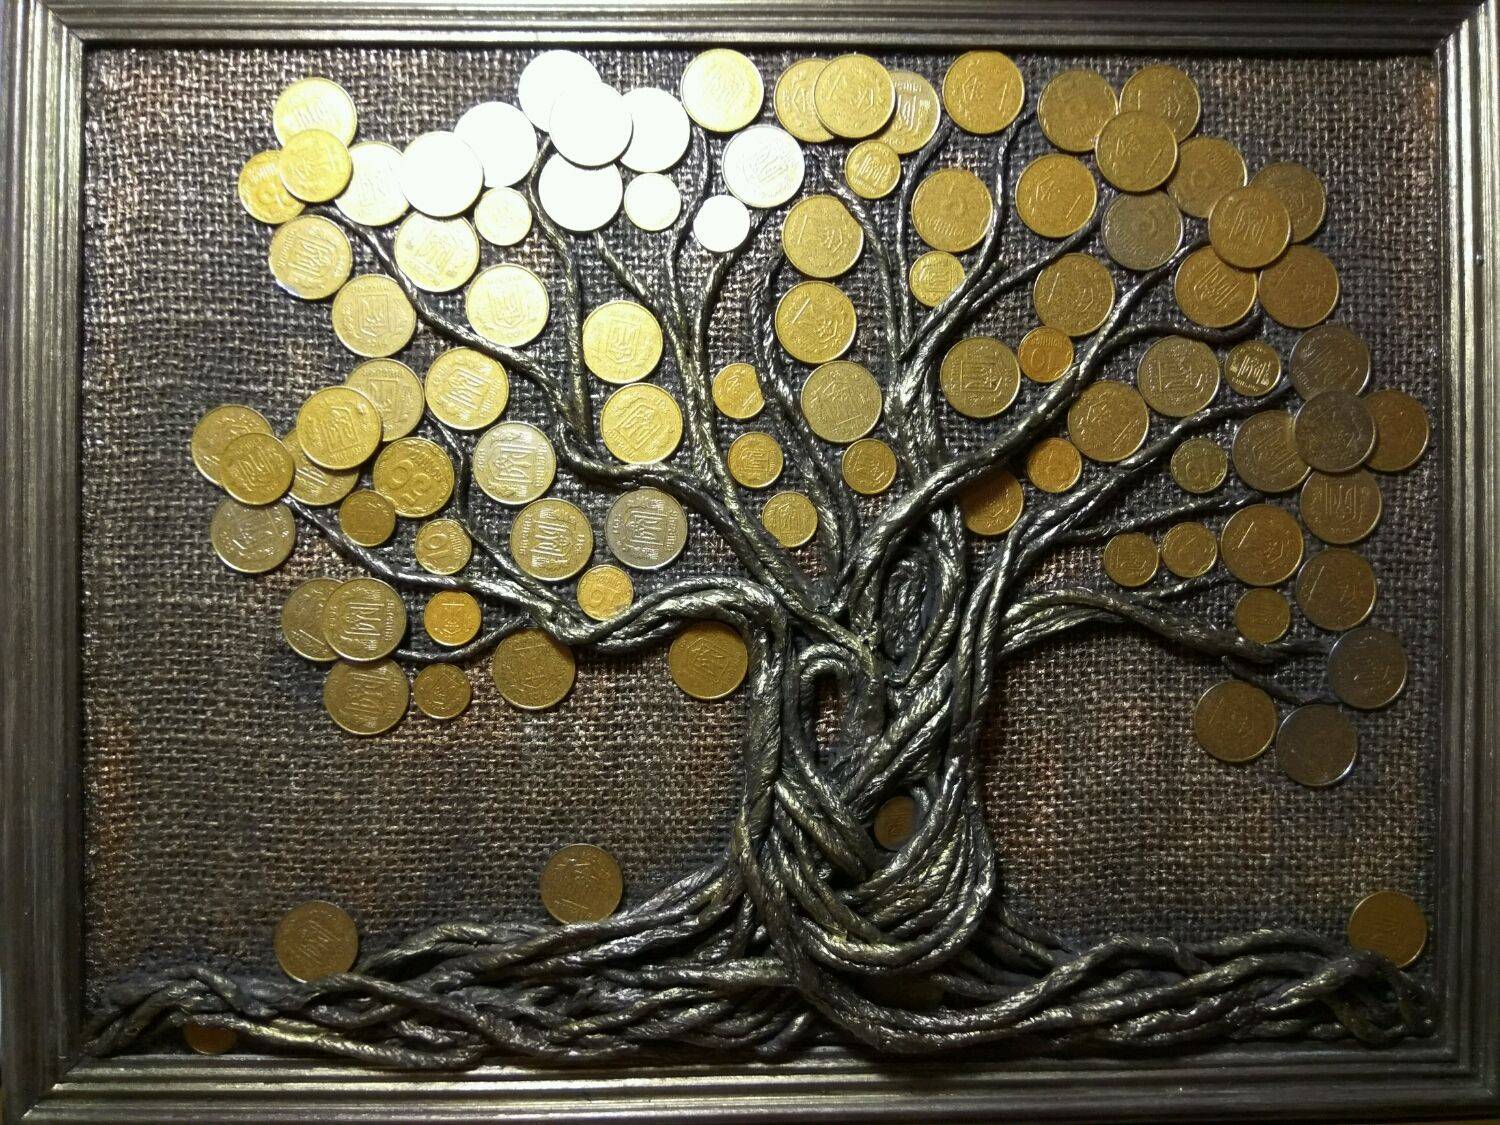 Картина денежного дерева из монет своими руками с видео